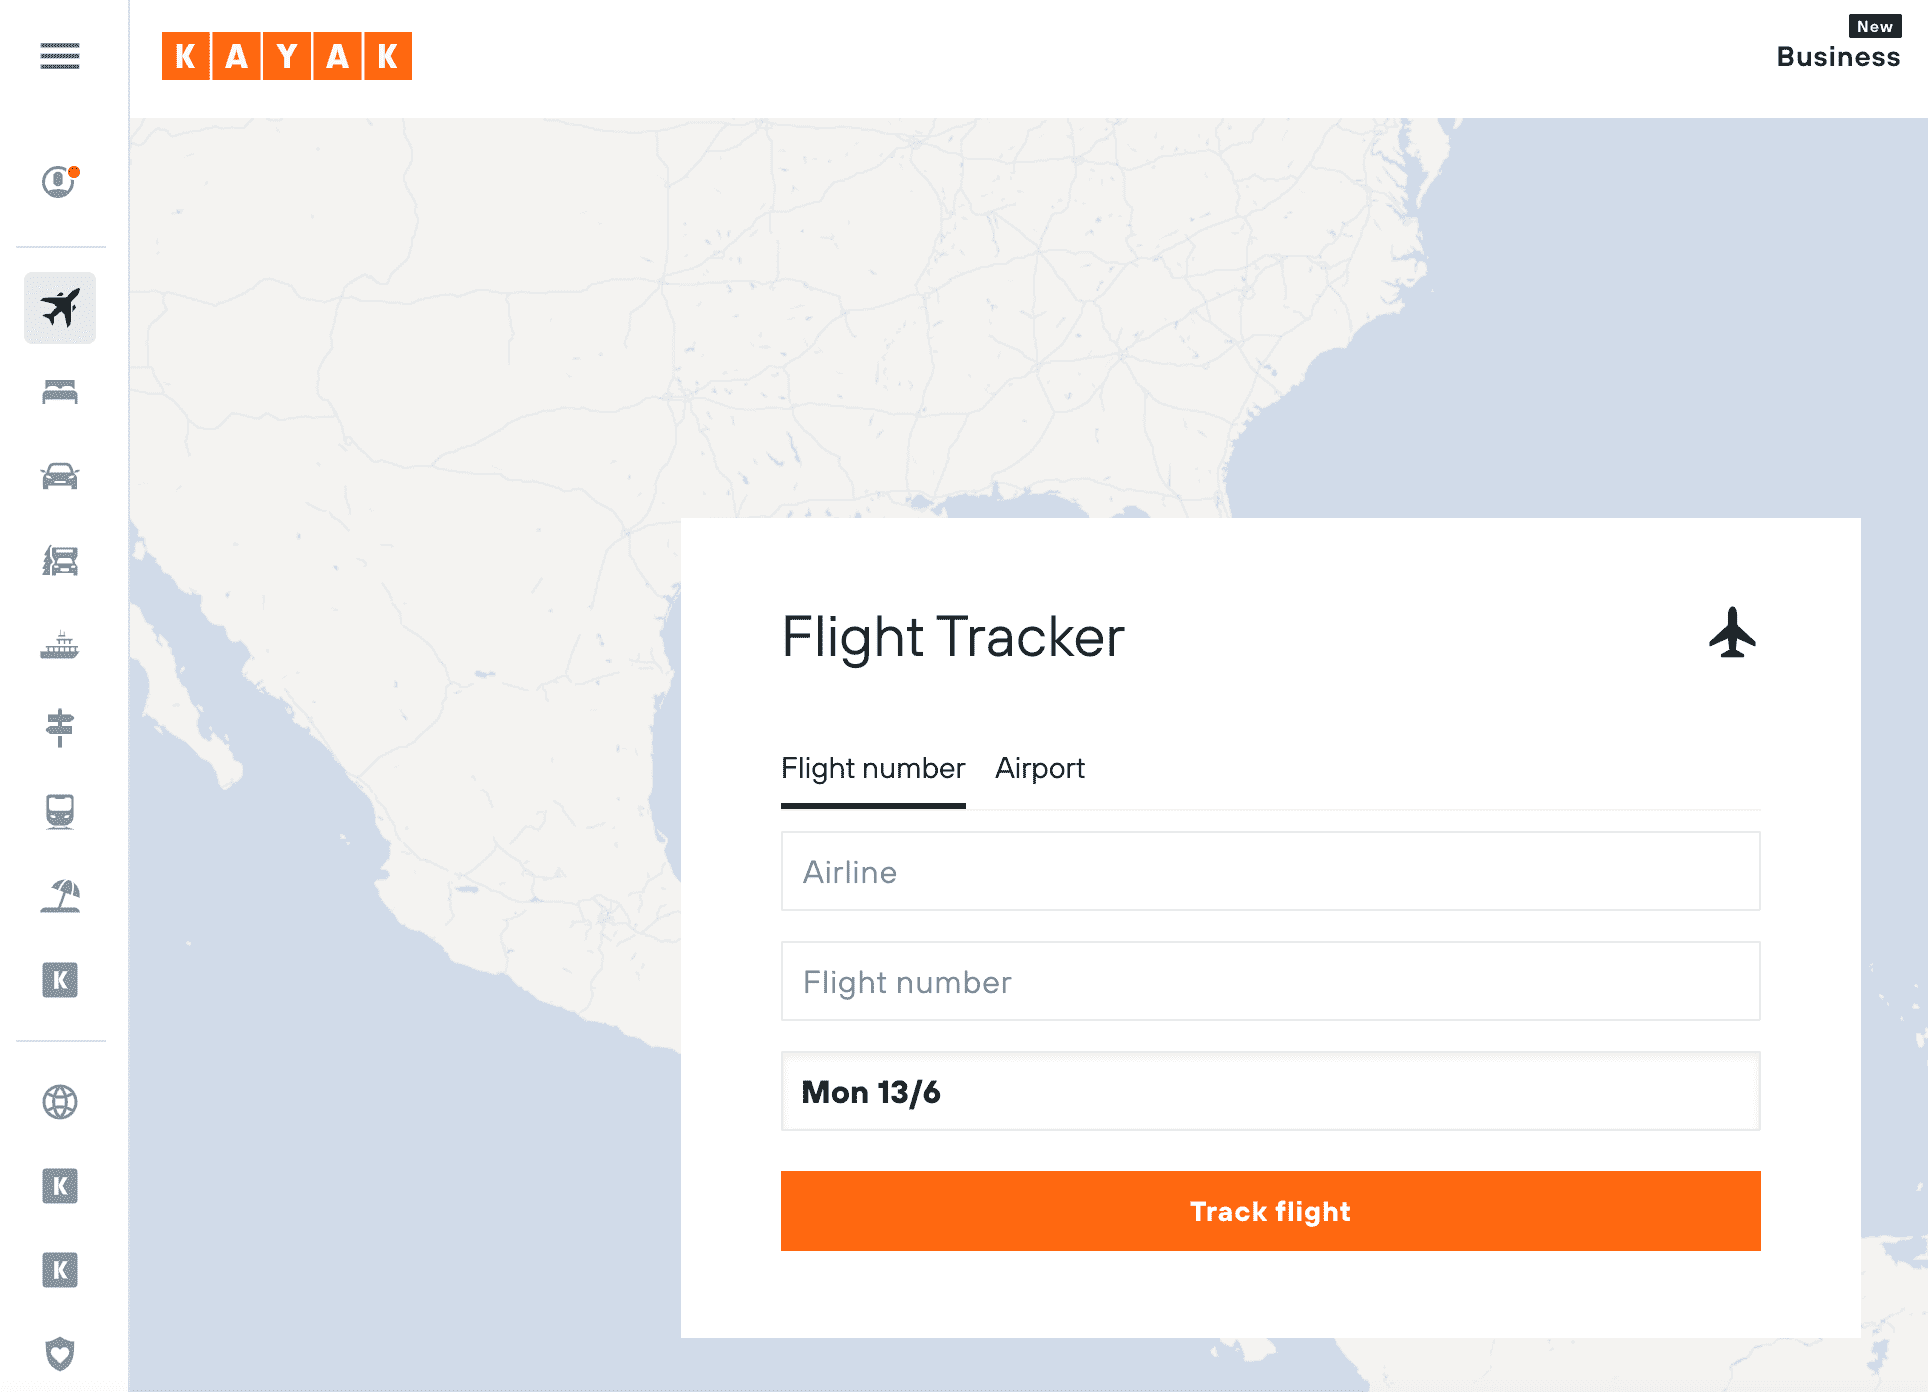 kayak.co.uk flight tracker tool